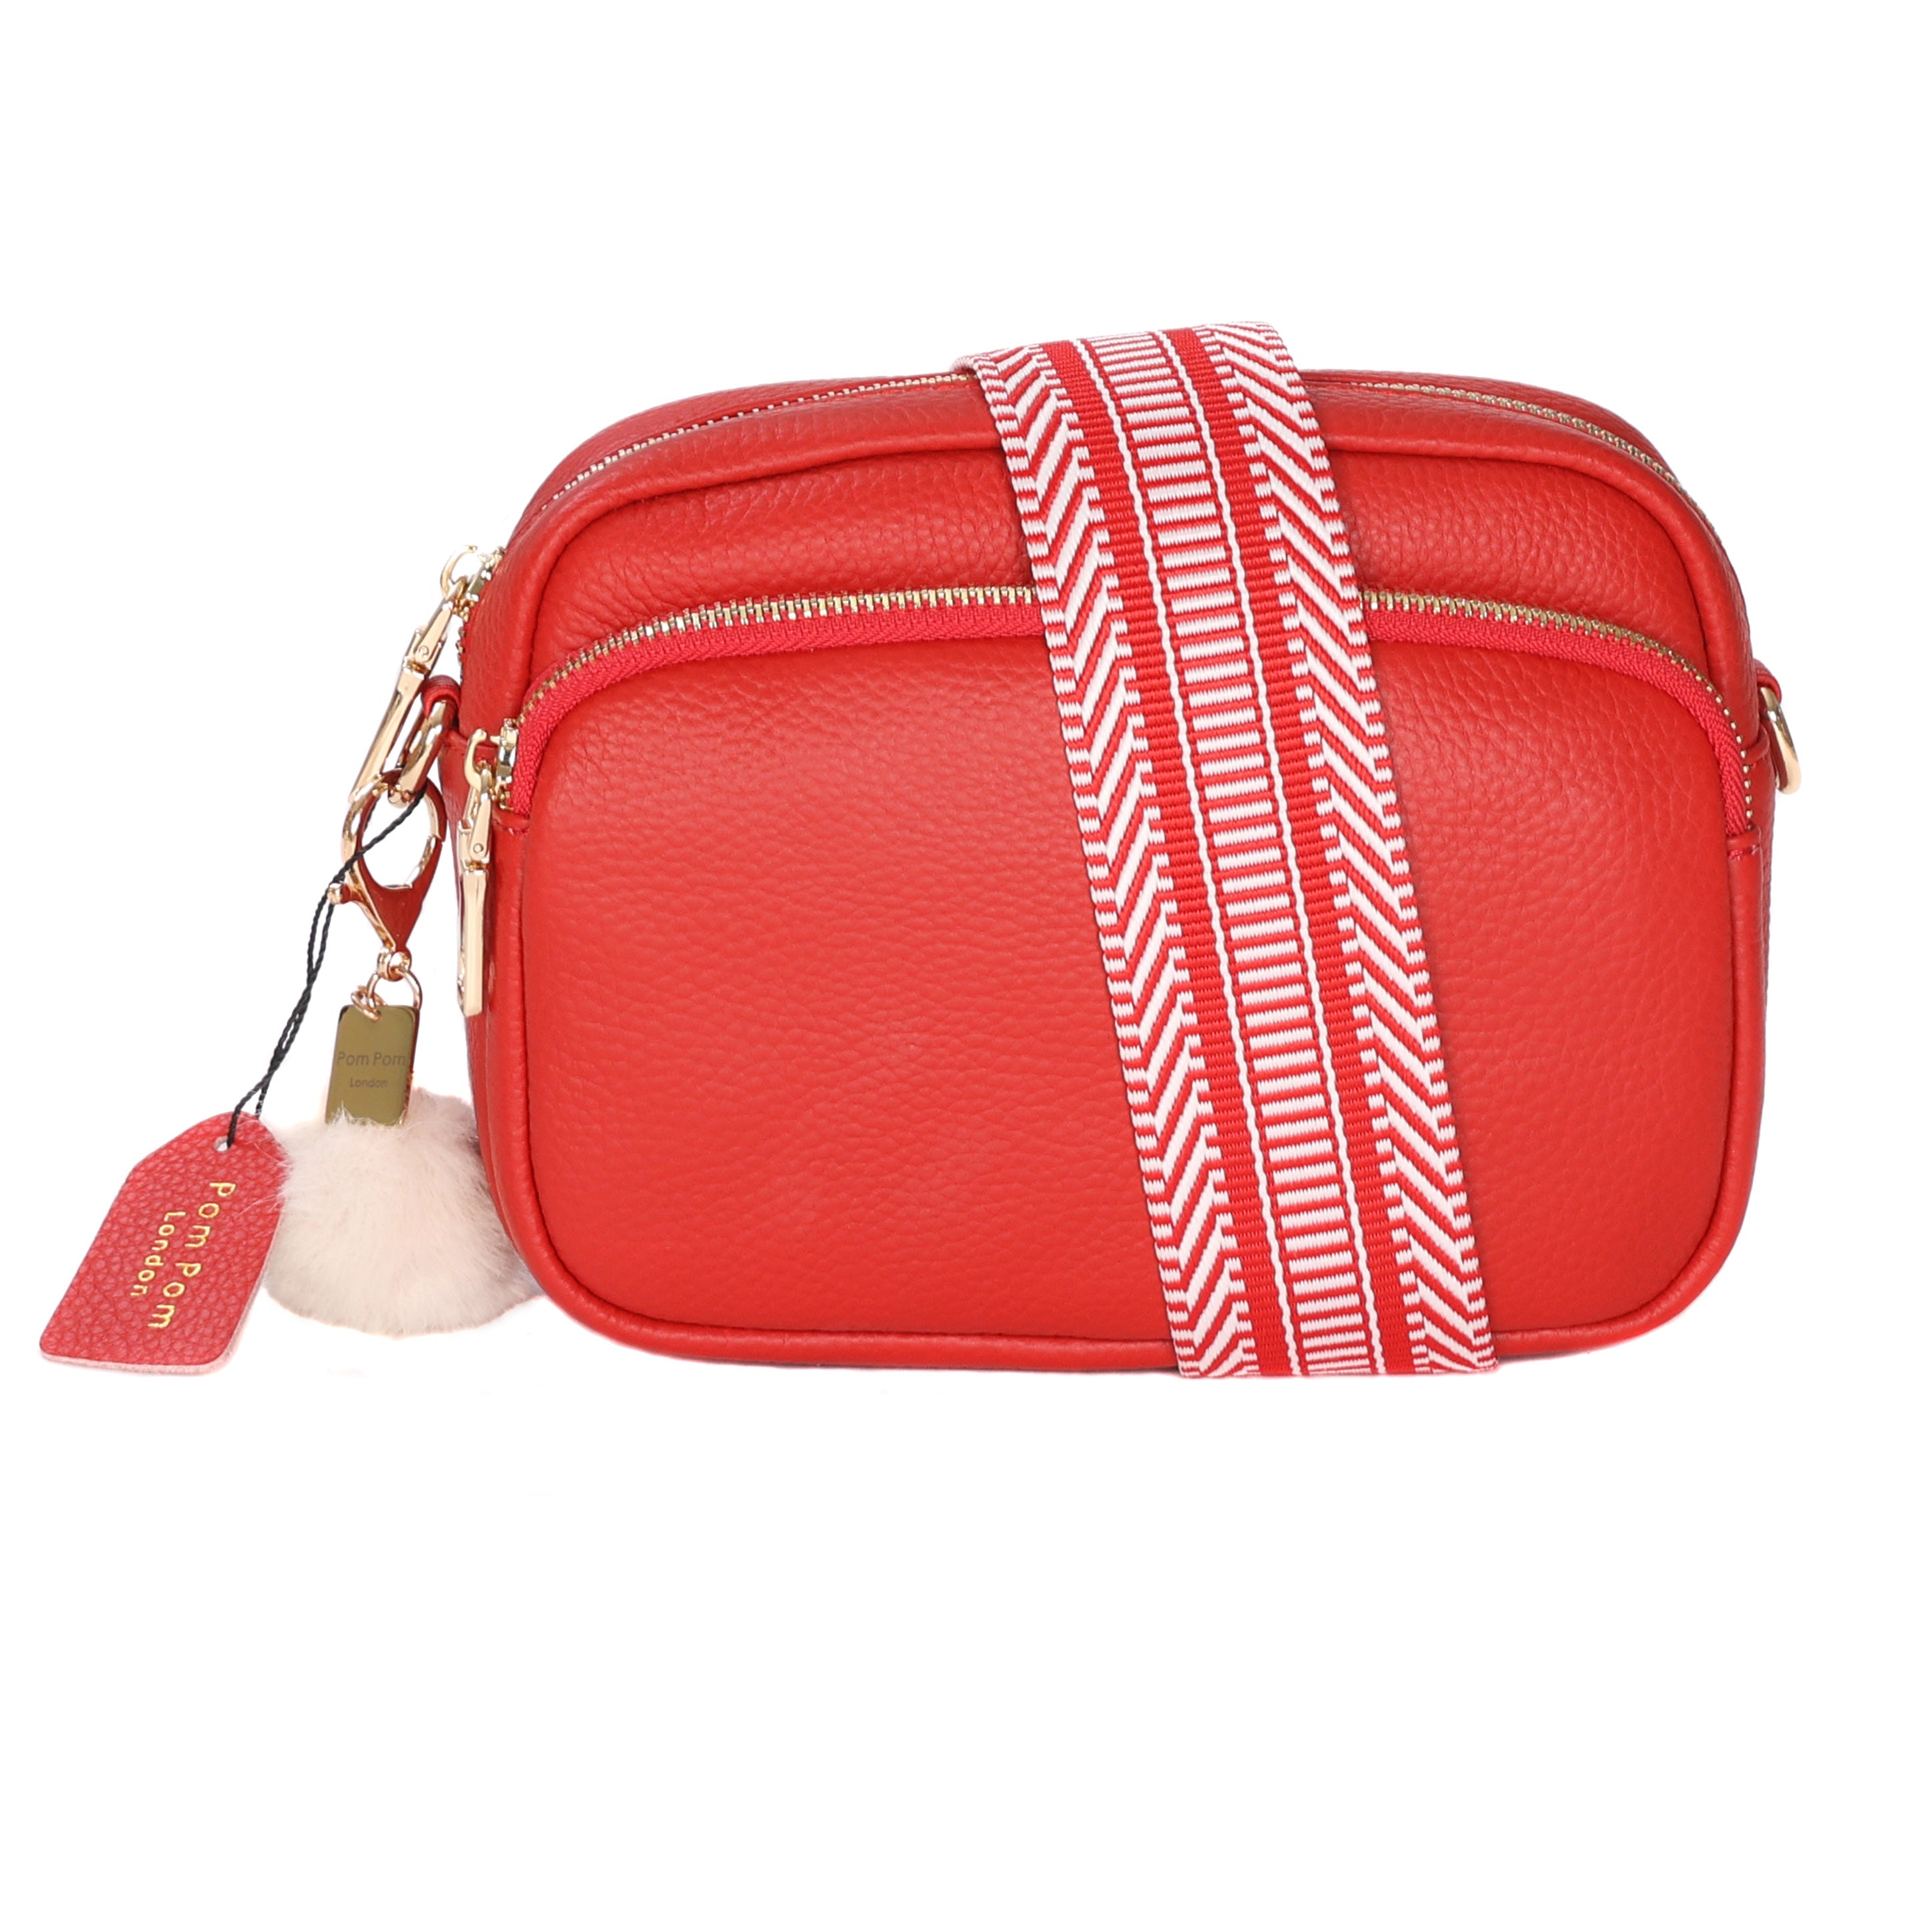 Girls Fashion Small Shoulder Bag Tassel Coin Purse Handbag,Red